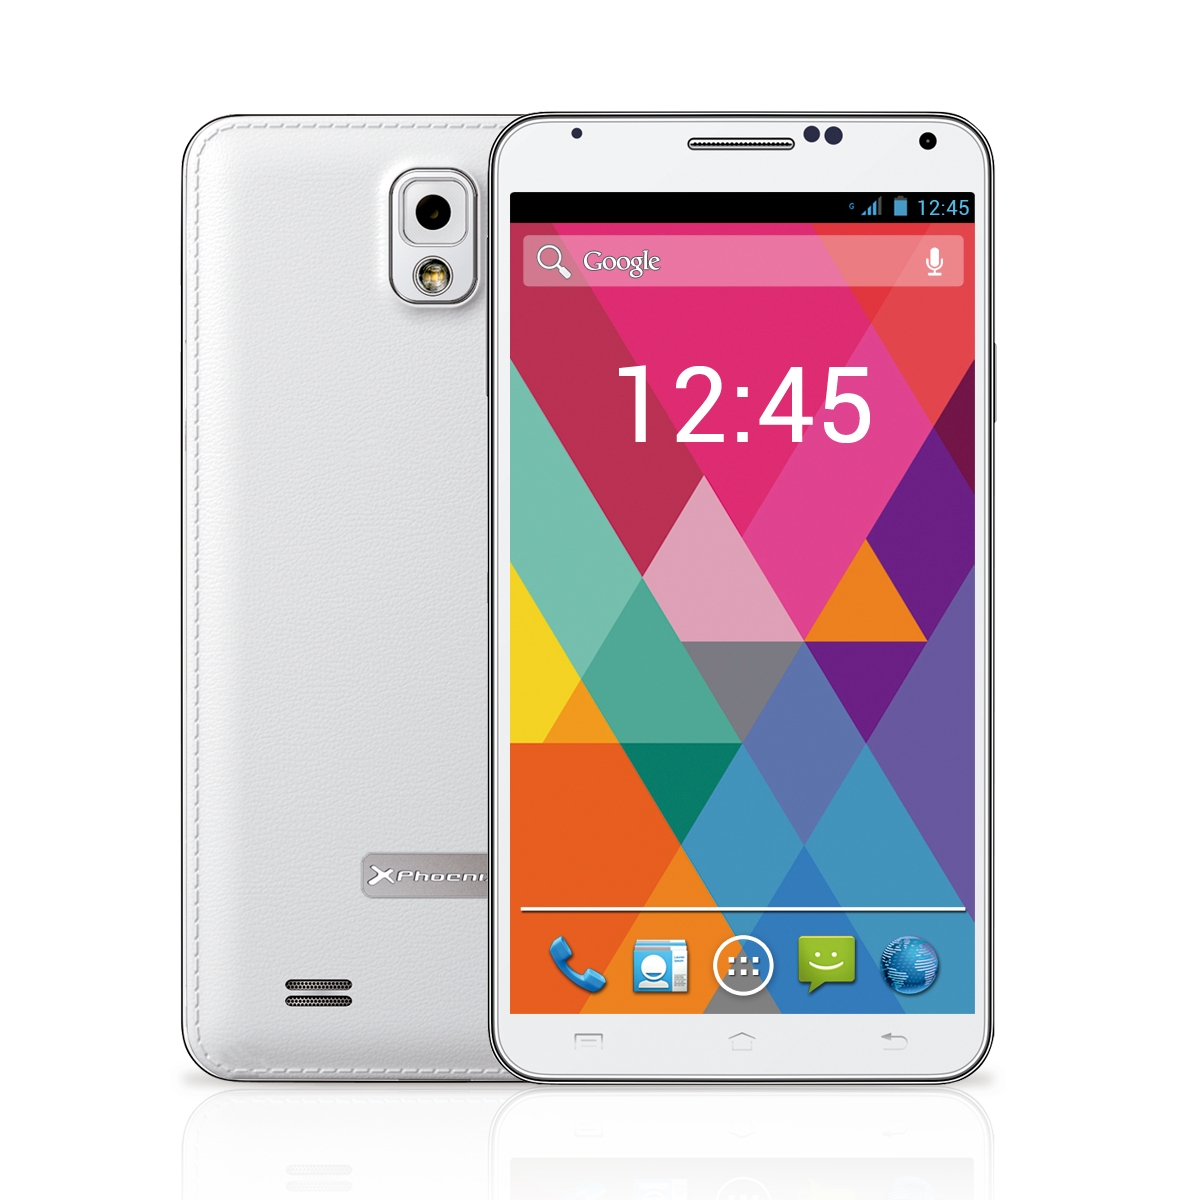 Telefono movil smartphone 5.5pulgadas phoenix rock xl blanco  quad core  1.3 ghz - pantalla qhd ips - android 4.2 - 1gb ram - 8gb flash - camara frontal 2mp +  trasera 13mp - dual sim - libre